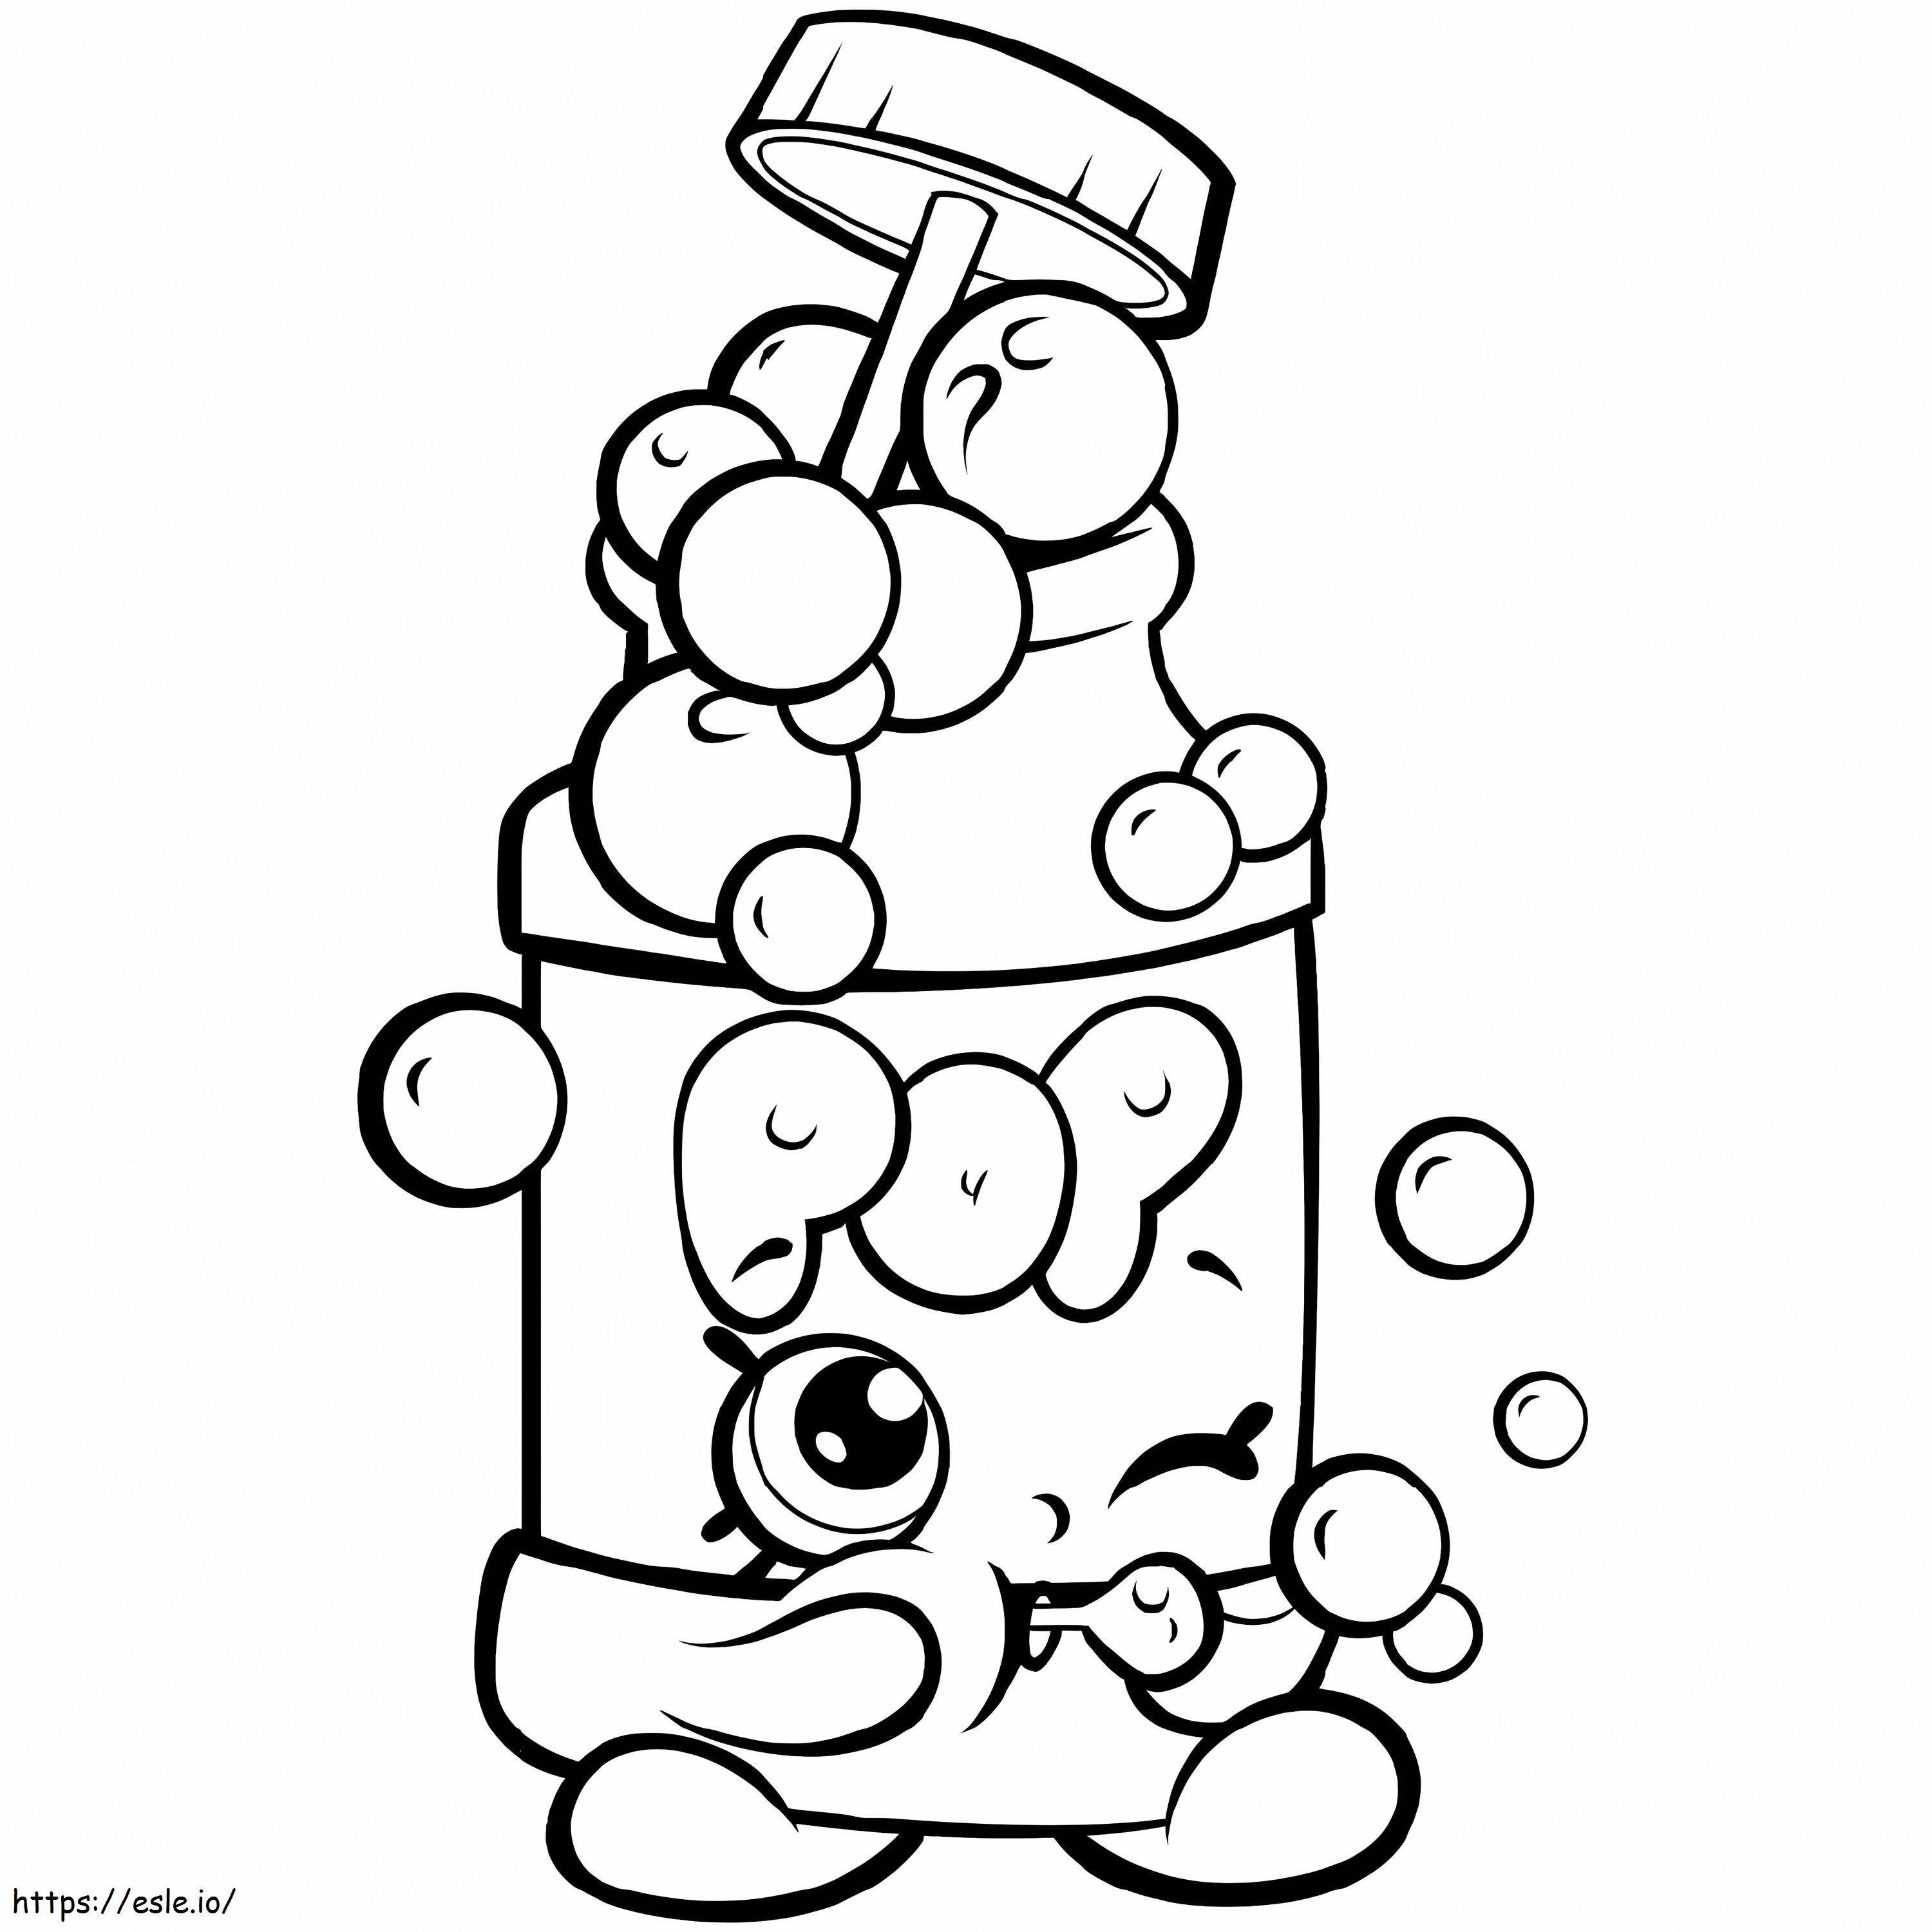 Pops Bubble Blower Shopkin coloring page